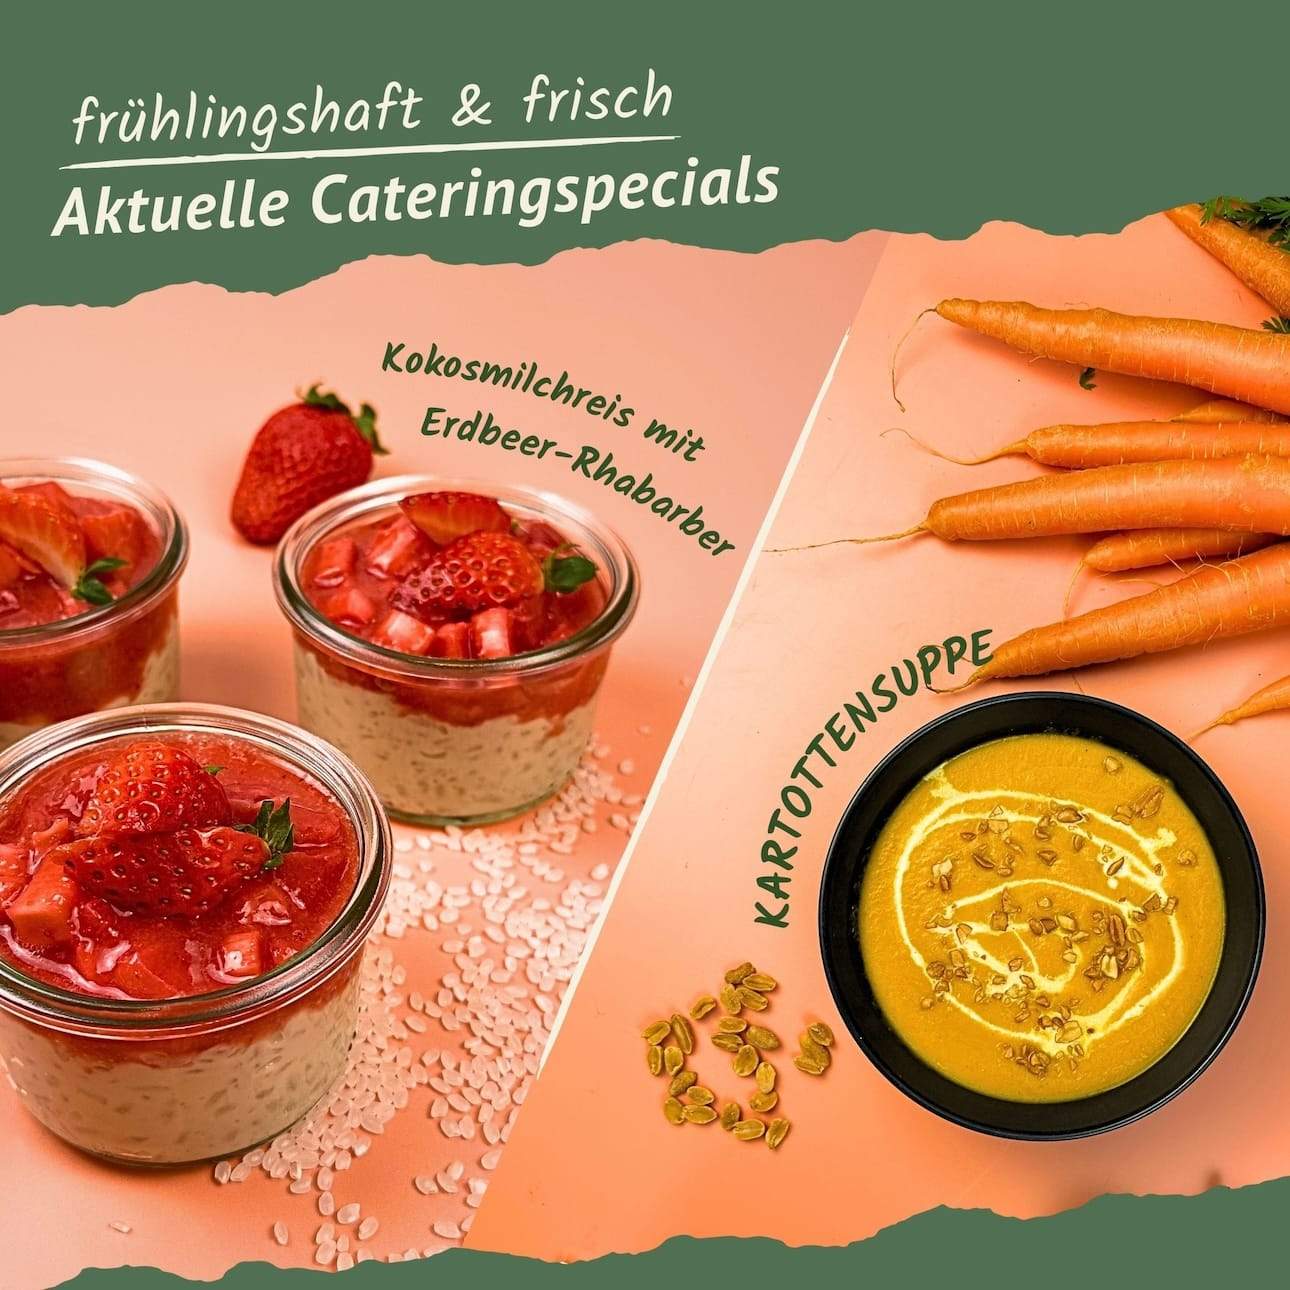 Fit Food Box - Bistro, Abhol- & Lieferservice für Bowls, Salate, Porridge in Kassel | Aktuelles